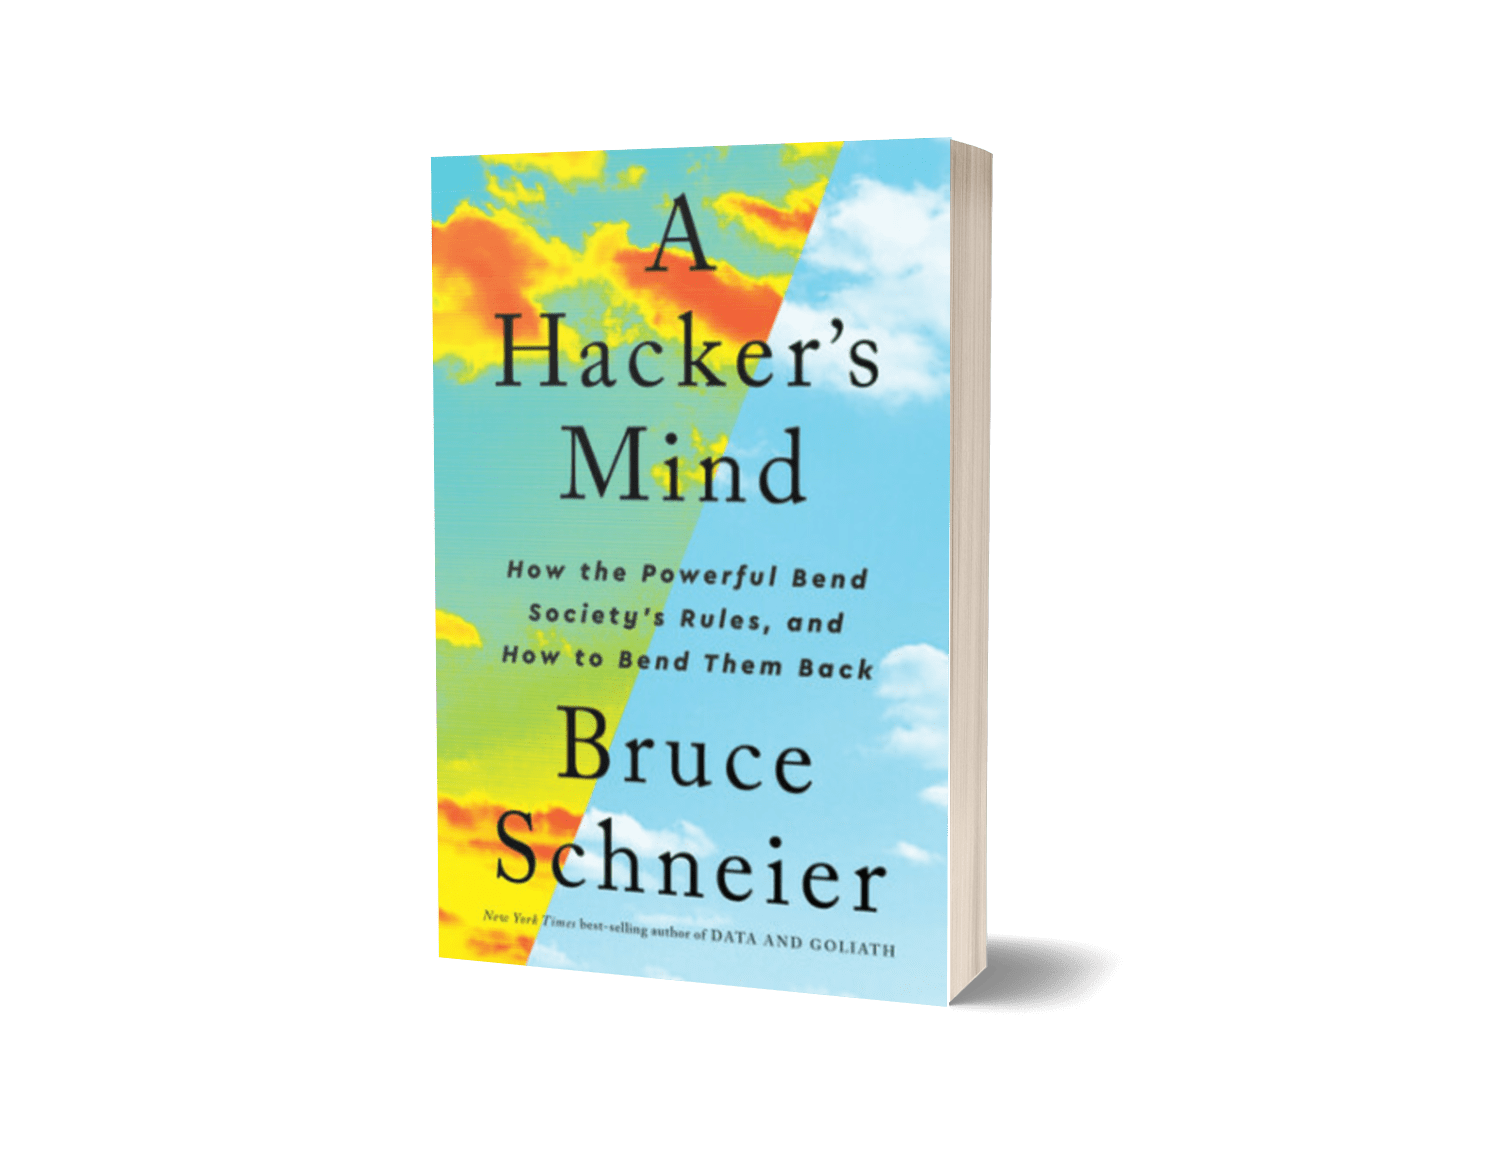 A Hacker’s Mind by Bruce Schneier